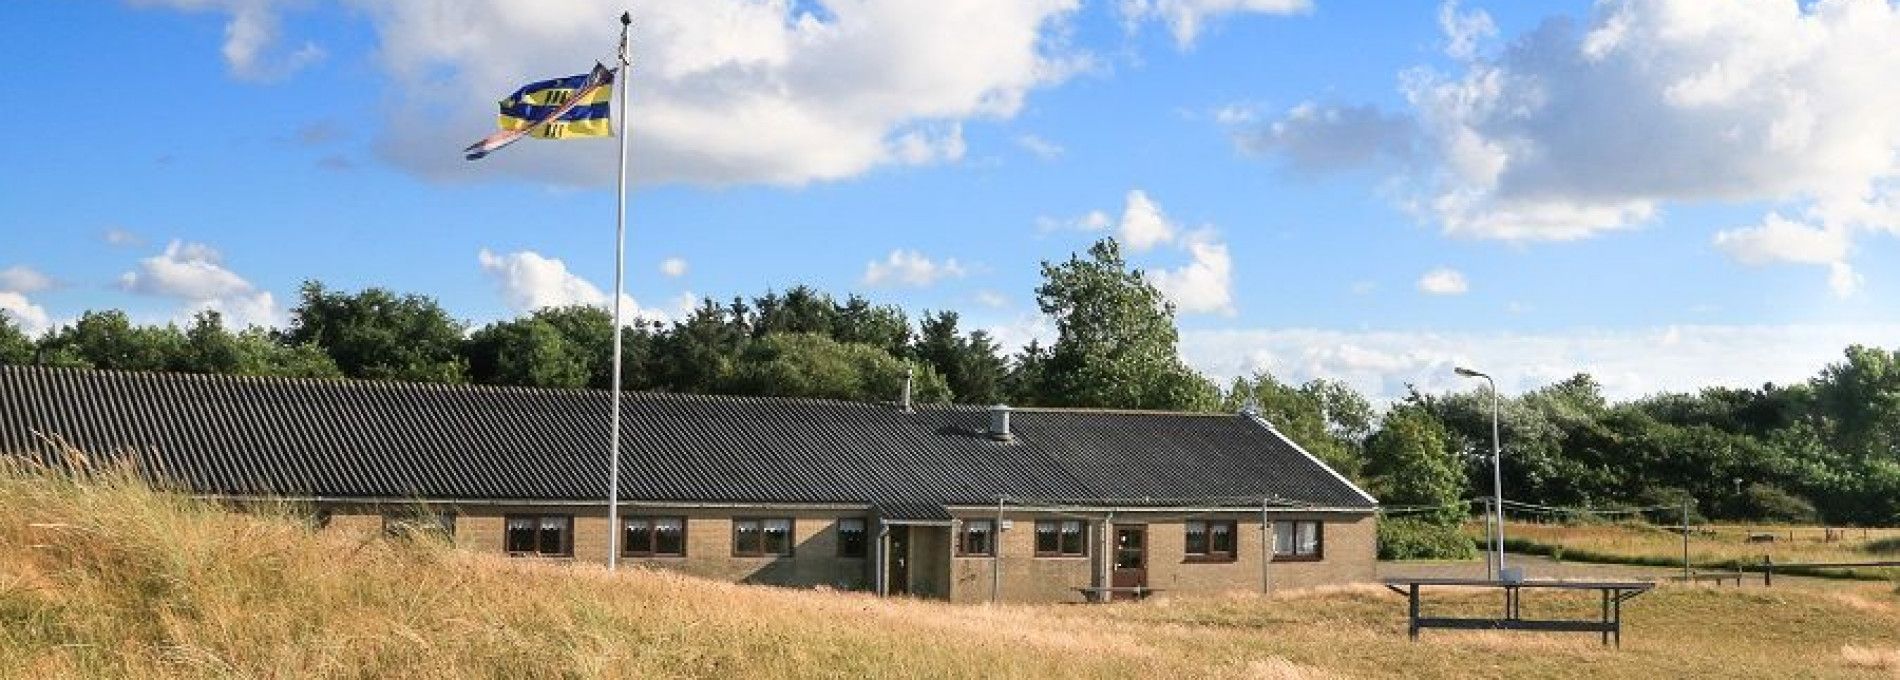 Kamphuis De Vallei - VVV Ameland